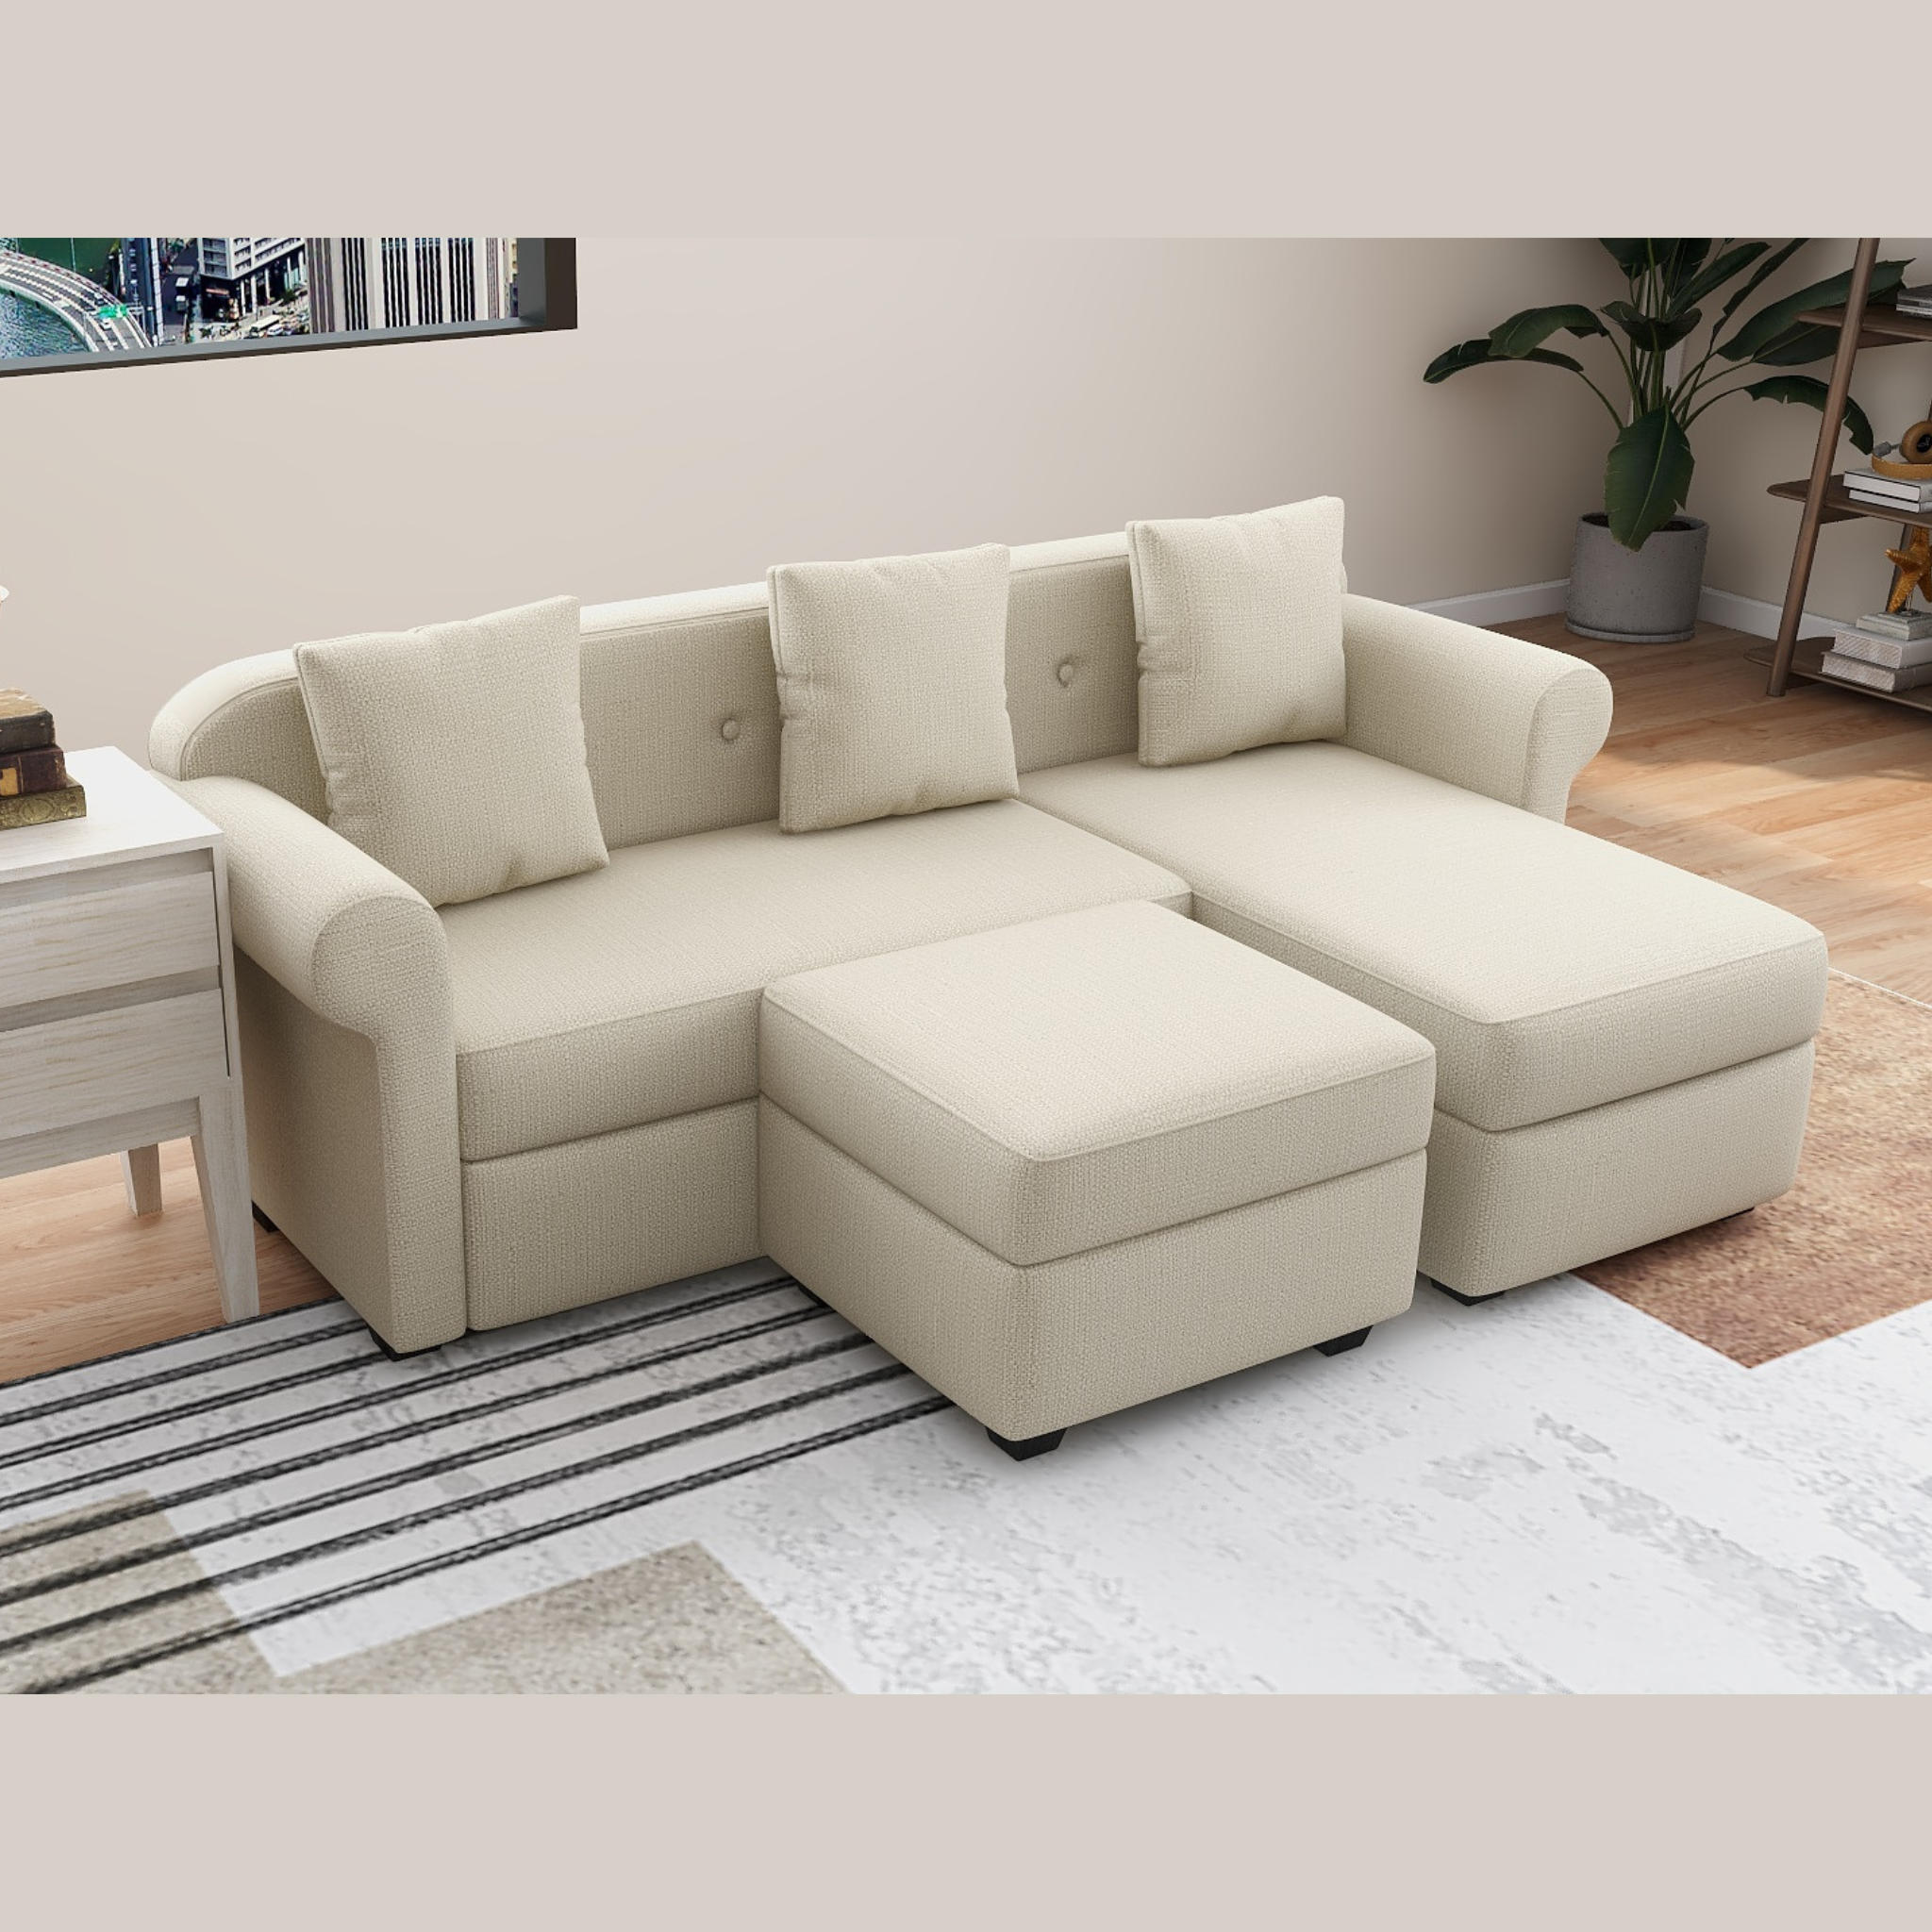 ROME L-SHAPE Fabric Sofa with Ottoman AF Home